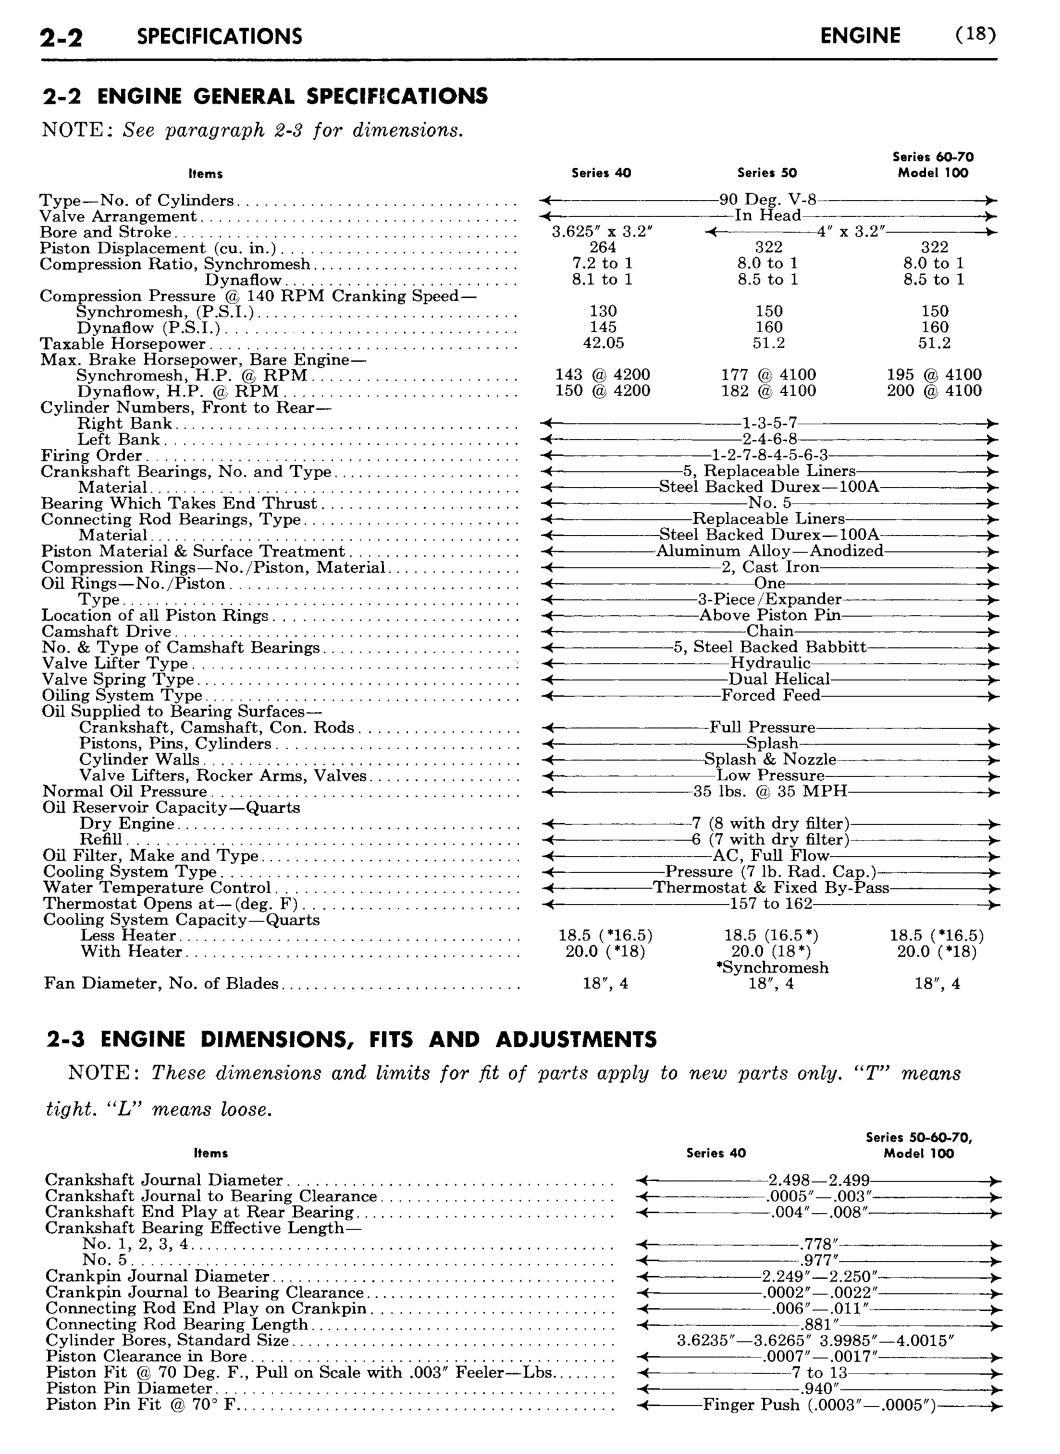 n_03 1954 Buick Shop Manual - Engine-002-002.jpg